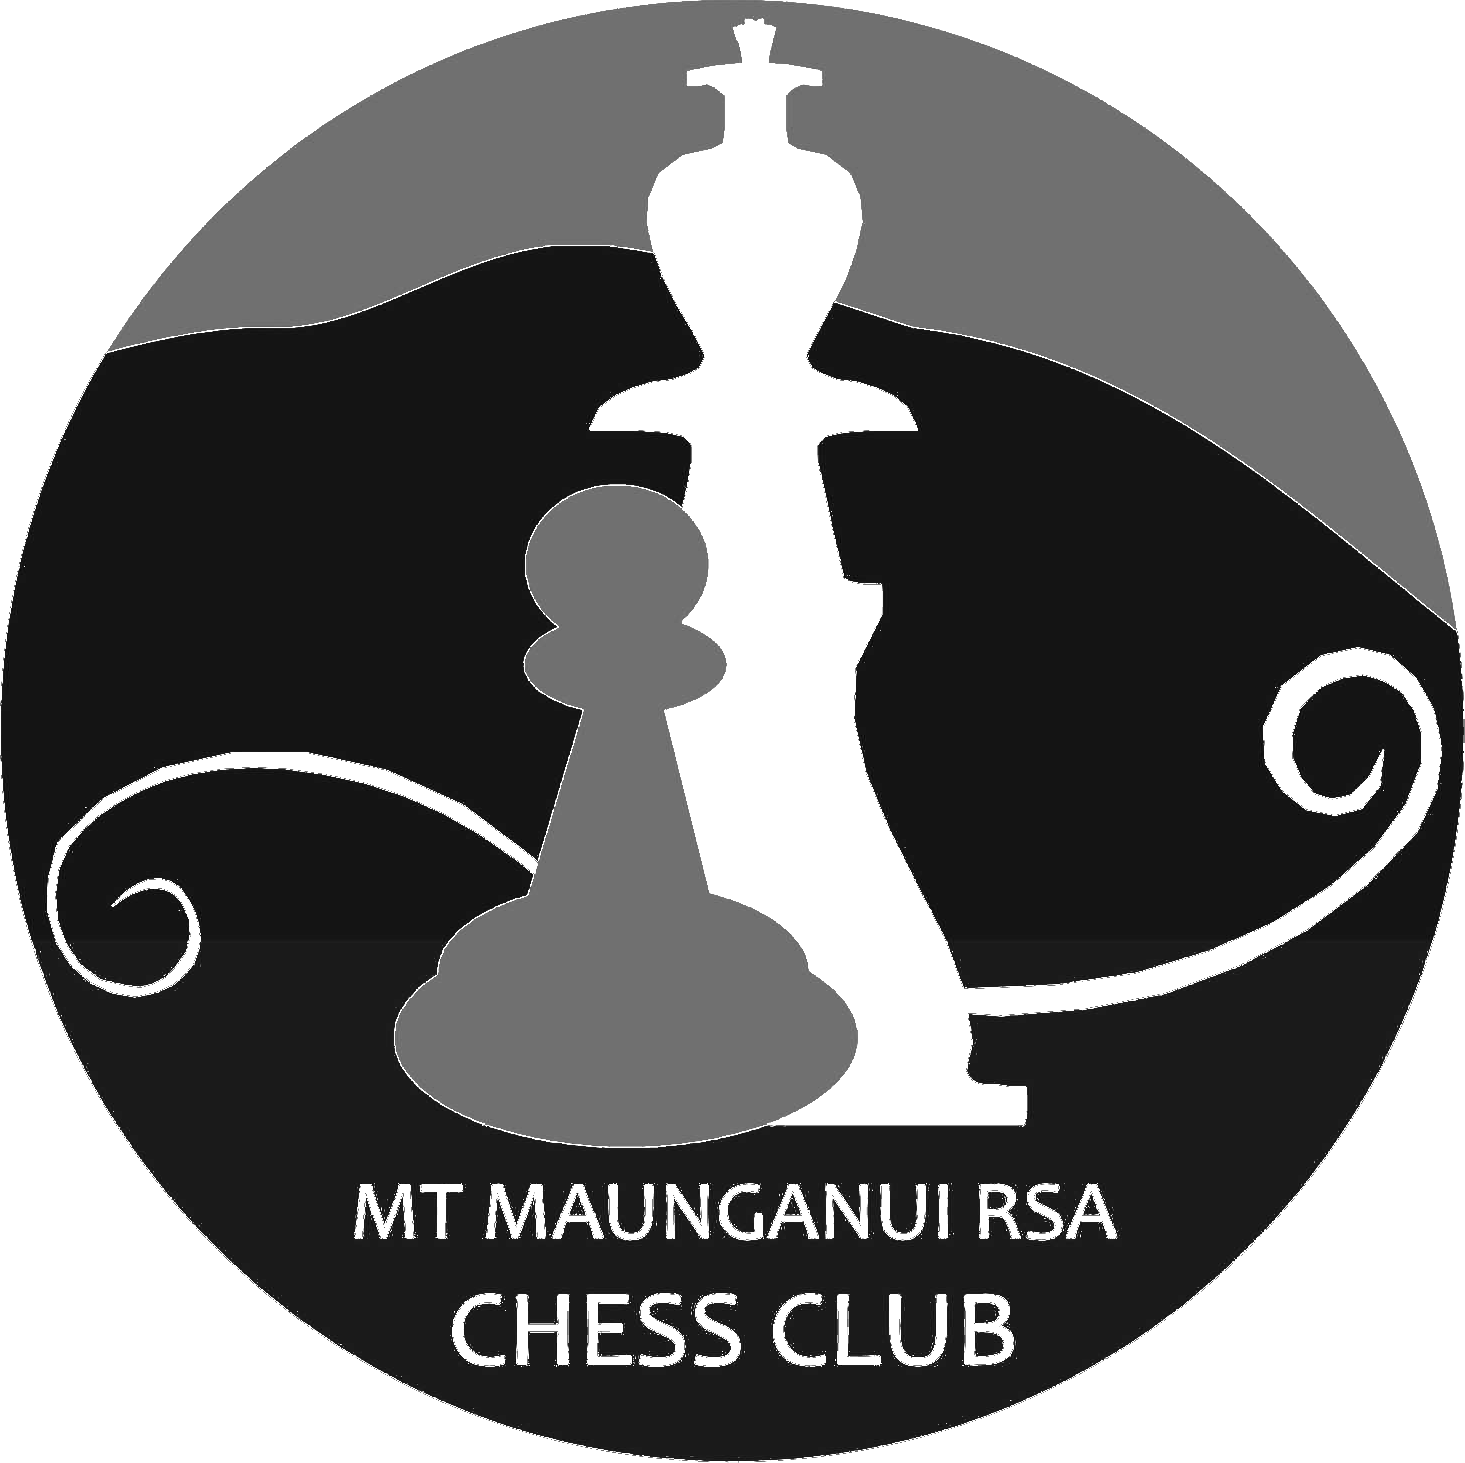 Mount Maunganui RSA Chess Club logo